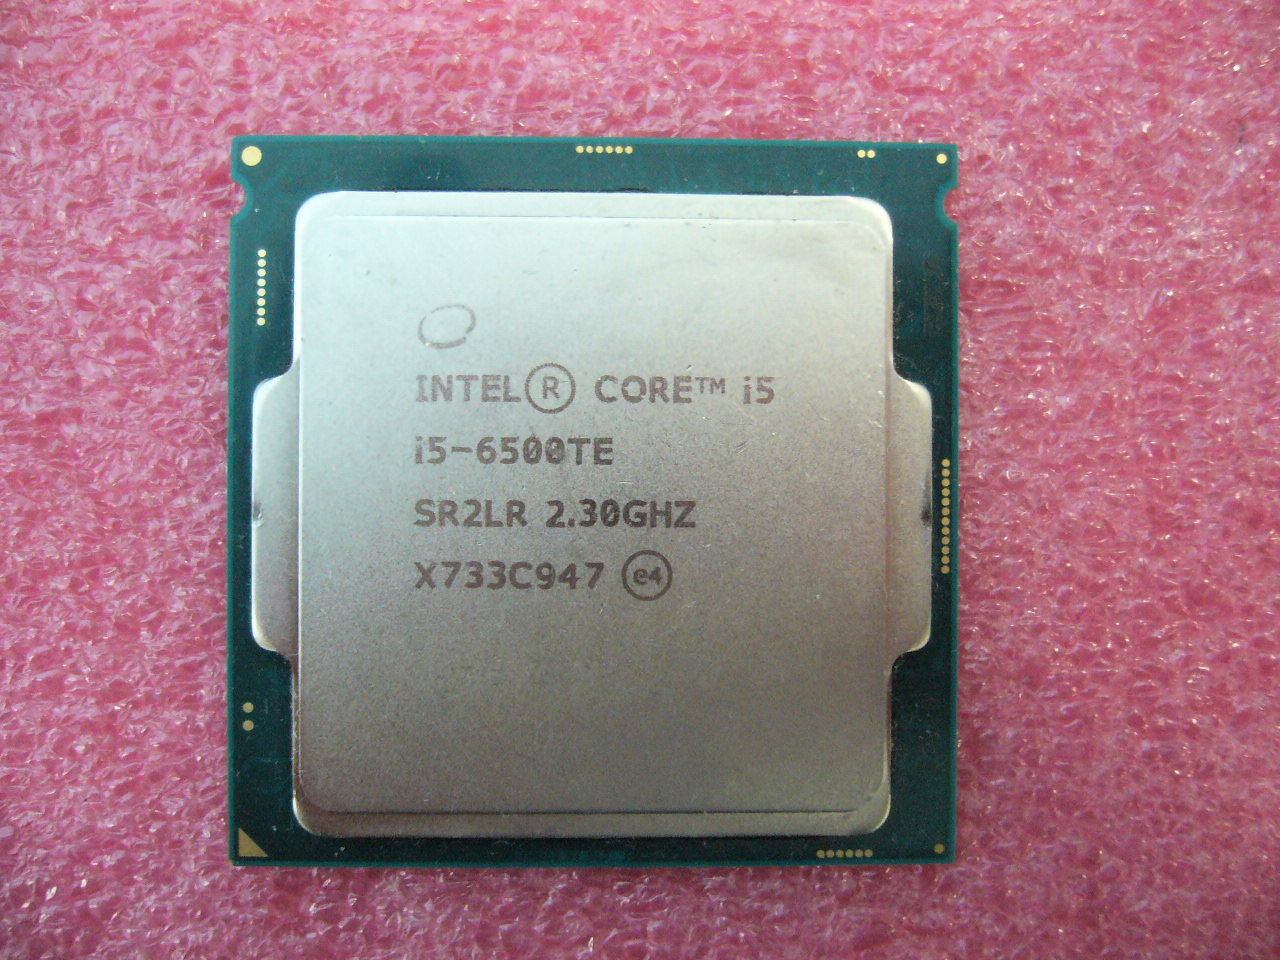 QTY 1x Intel CPU i5-6500TE Quad-Cores 2.30Ghz 6MB LGA1151 SR2LR NOT WORKING - Click Image to Close